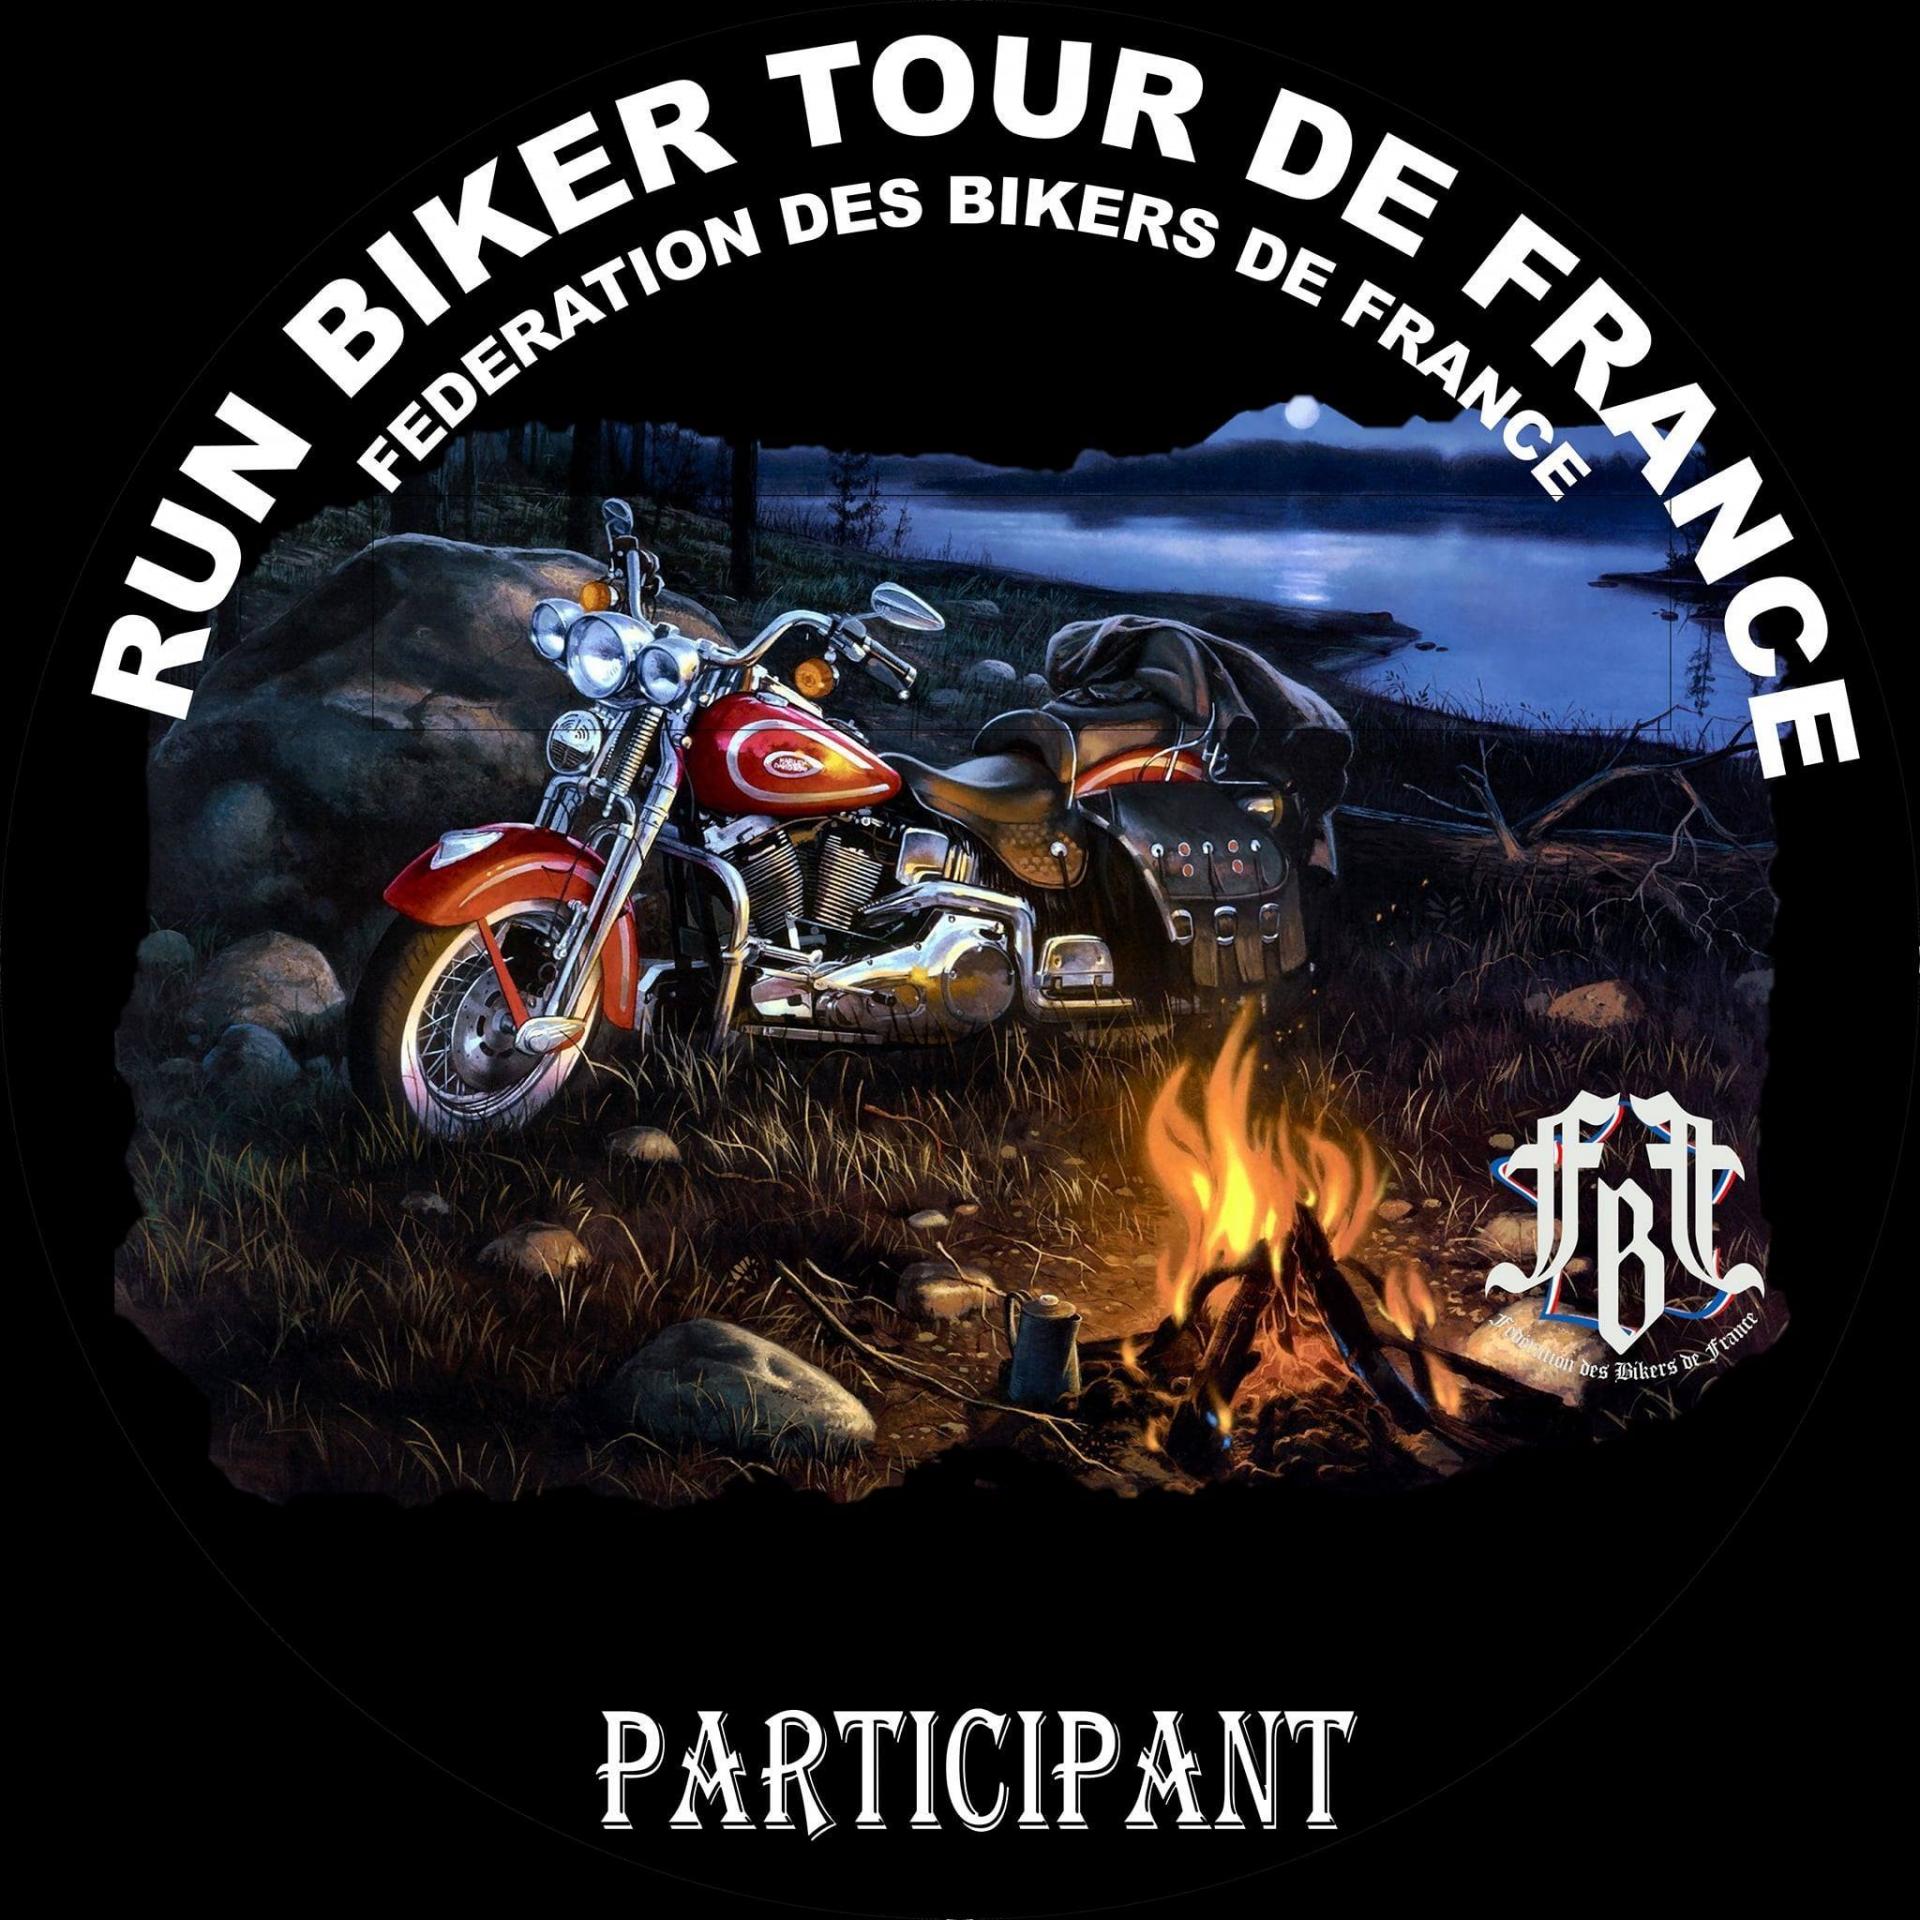 Run biker participant